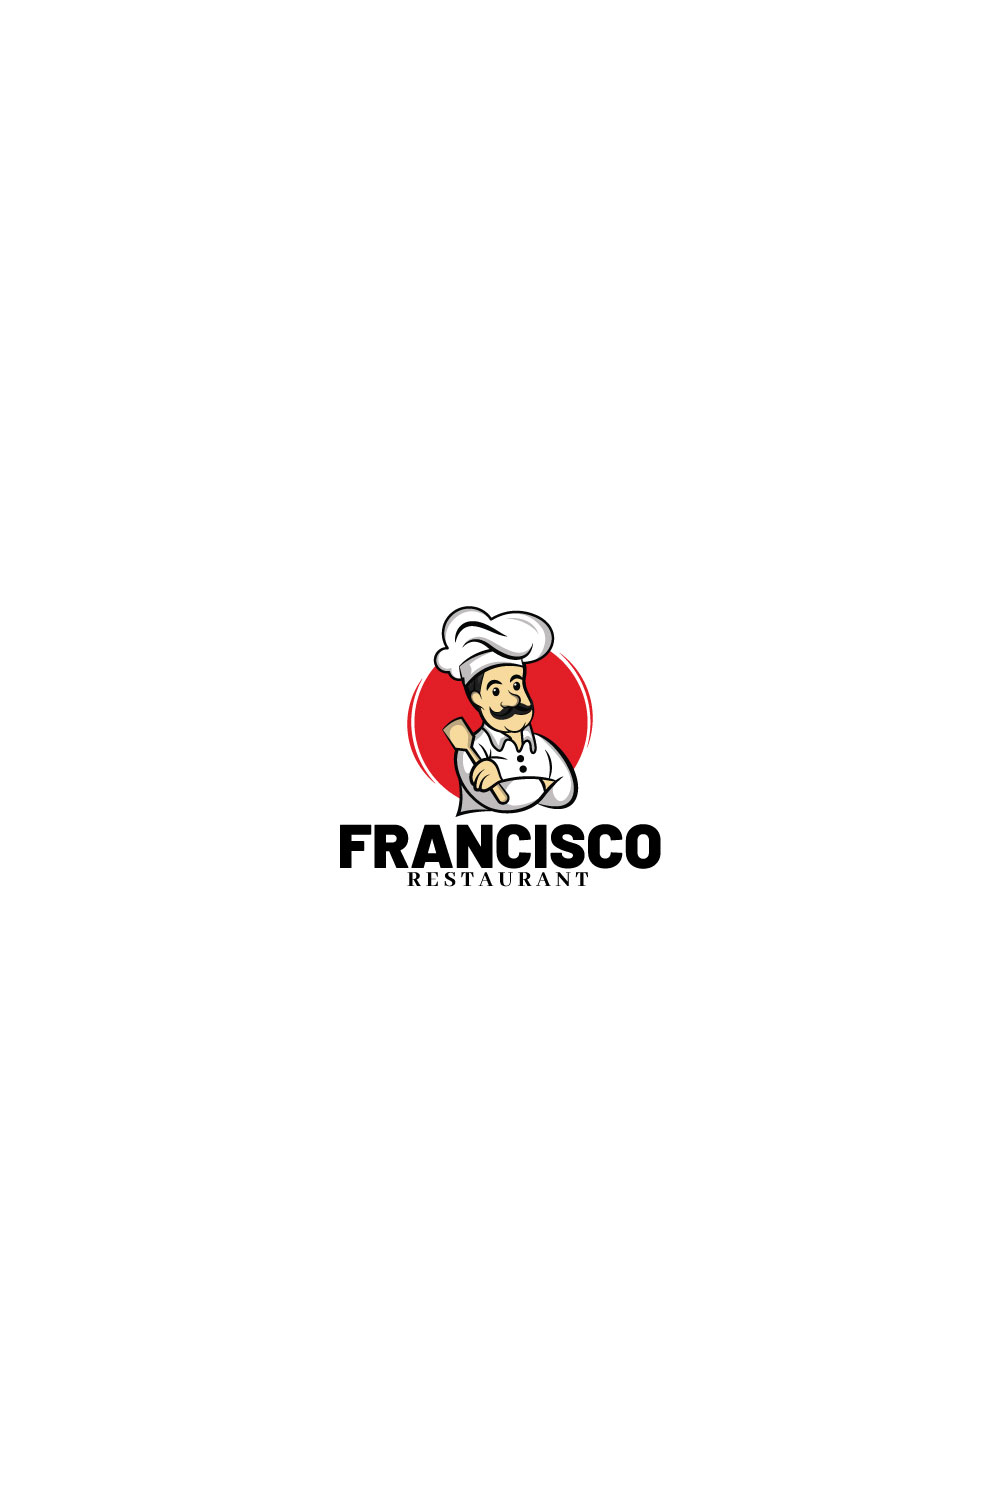 francisco logo pint 718